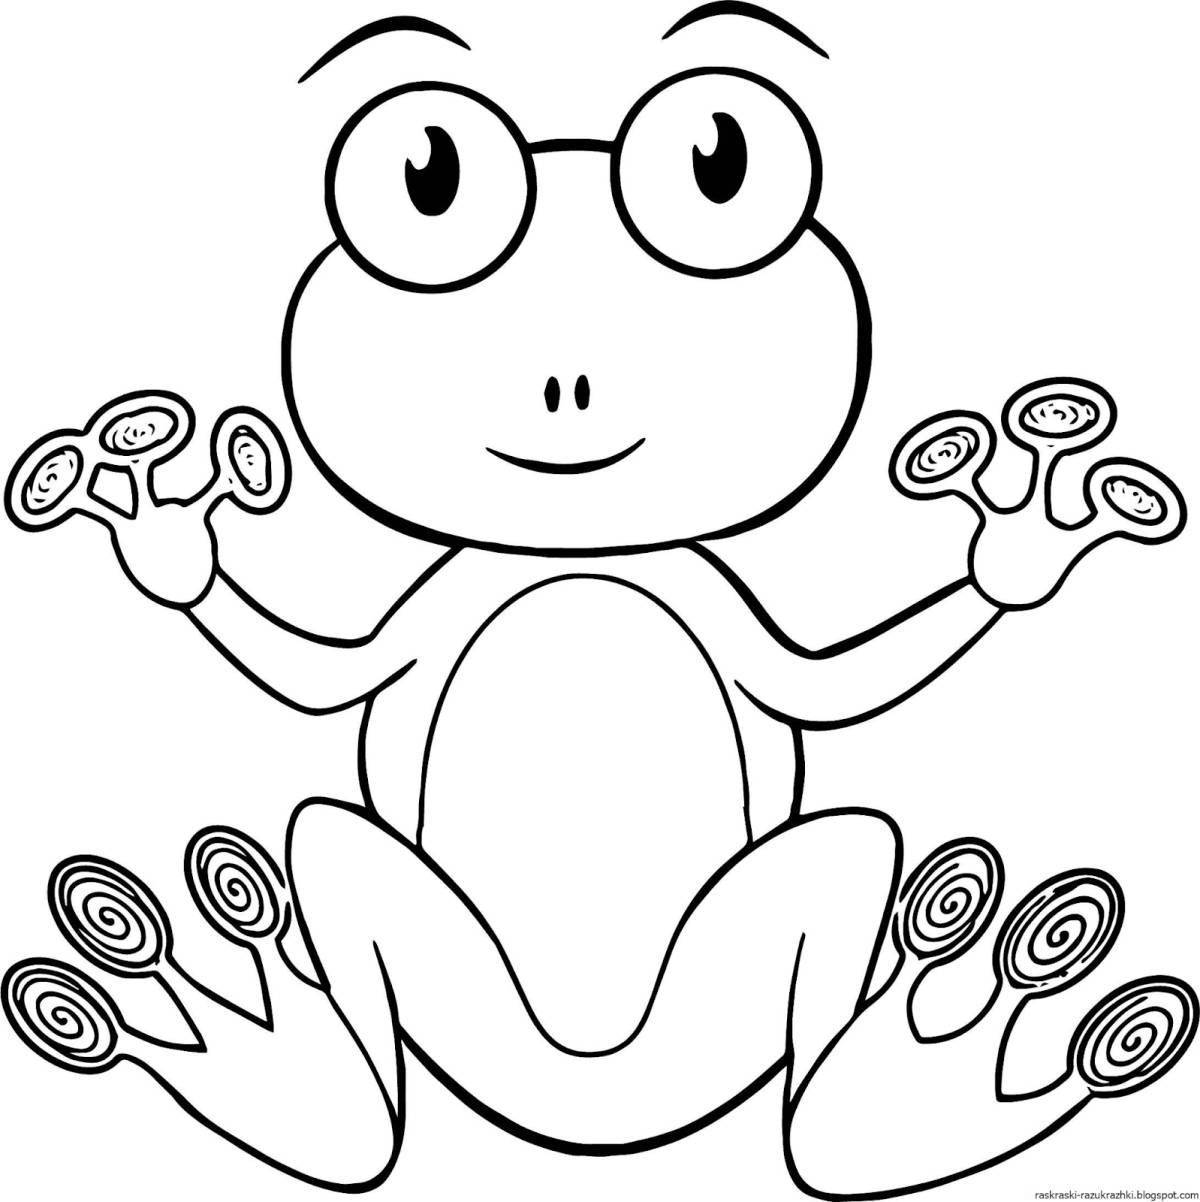 Раскраска яркая лягушка-путешественница для детей